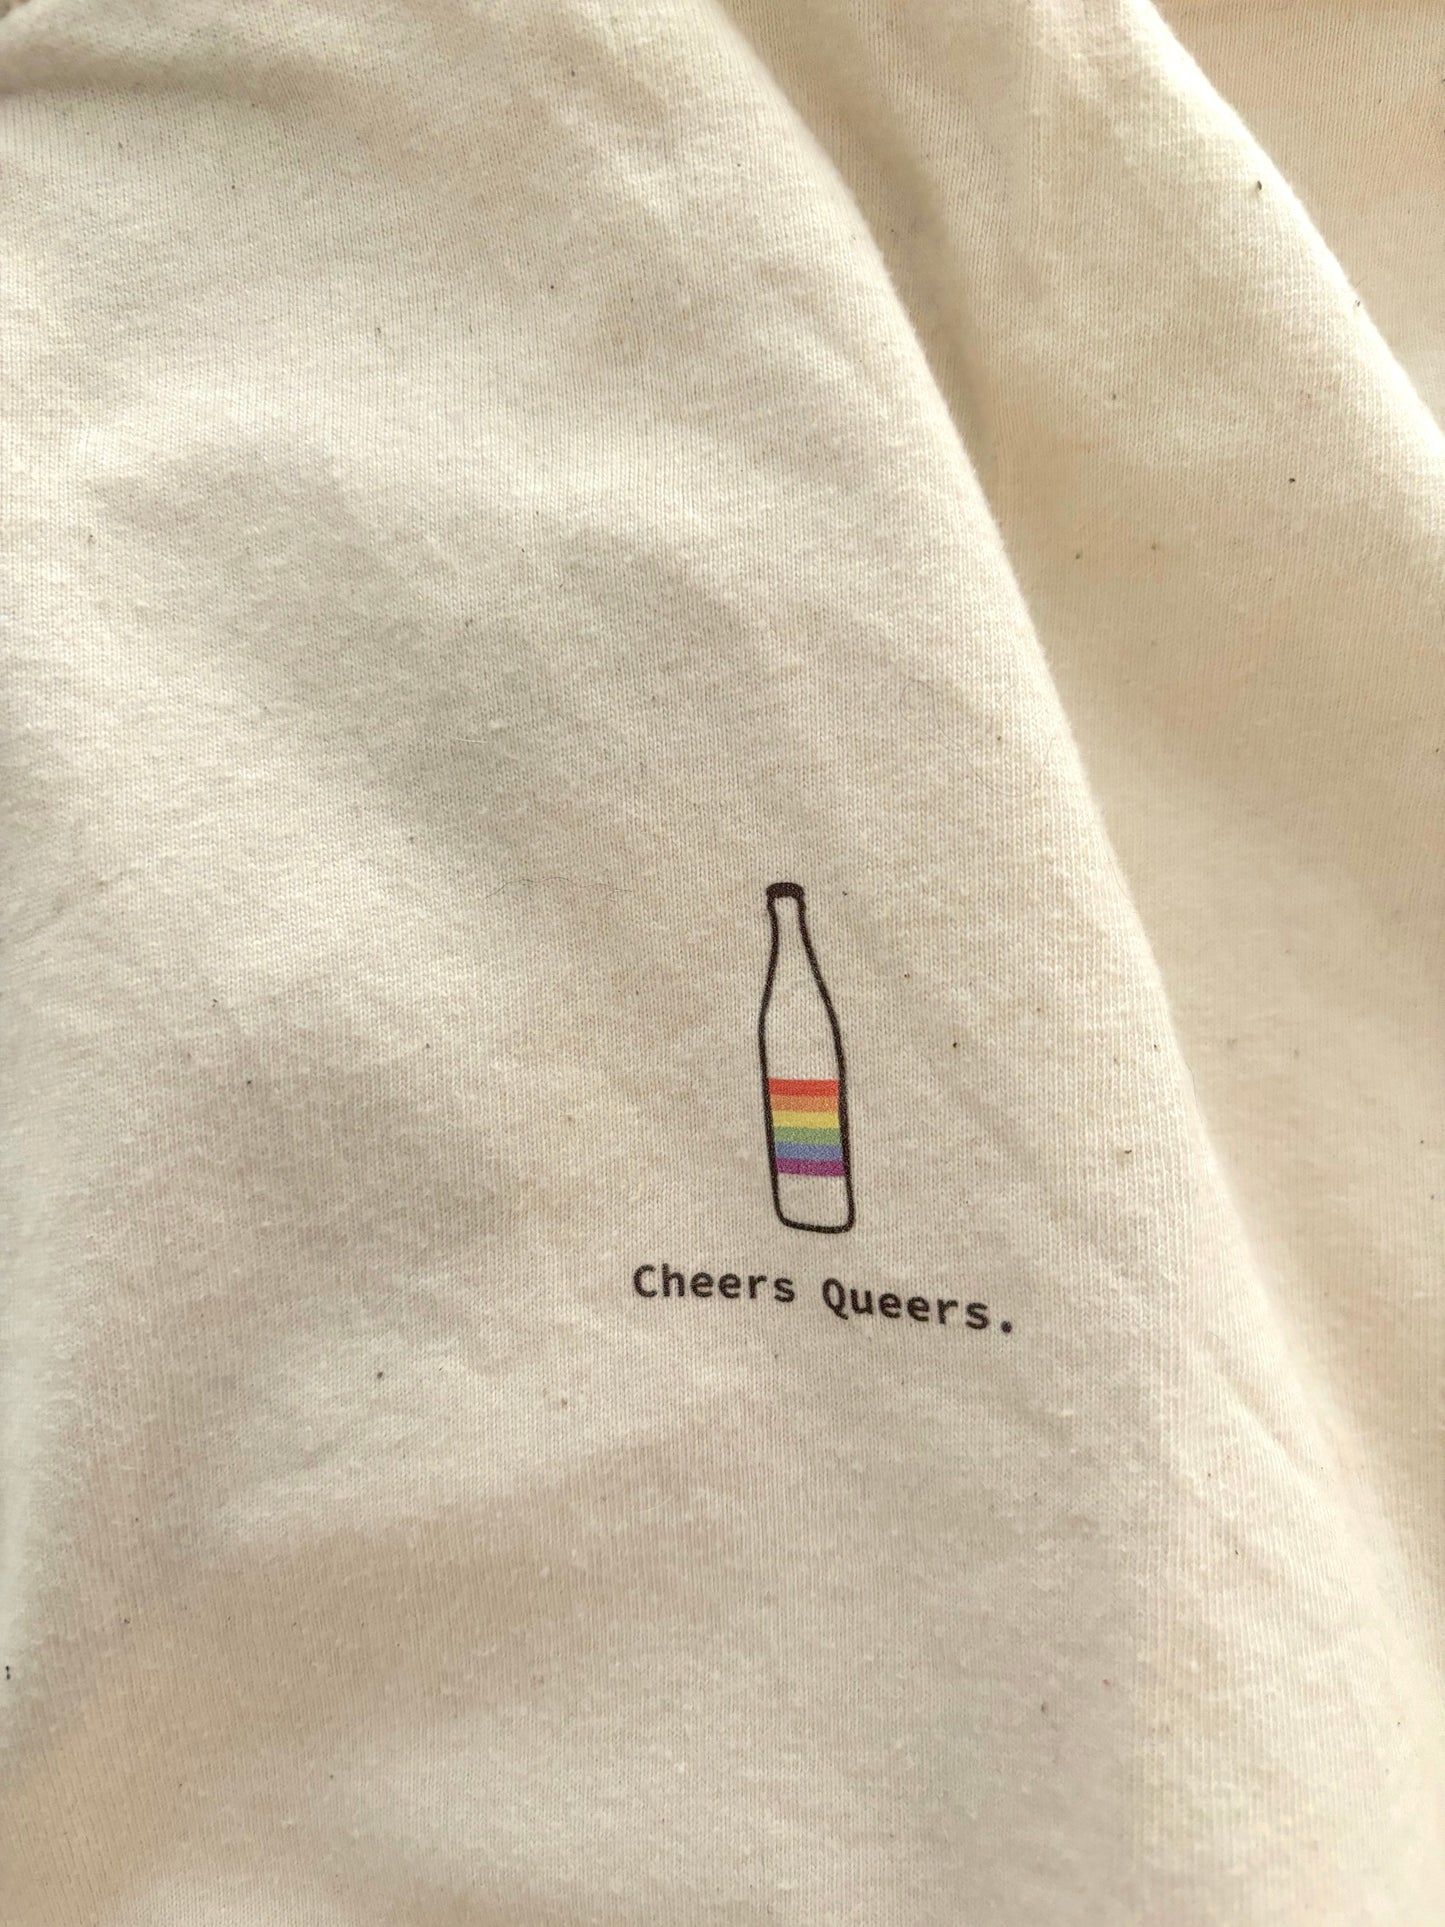 Cheers Queers Shirt